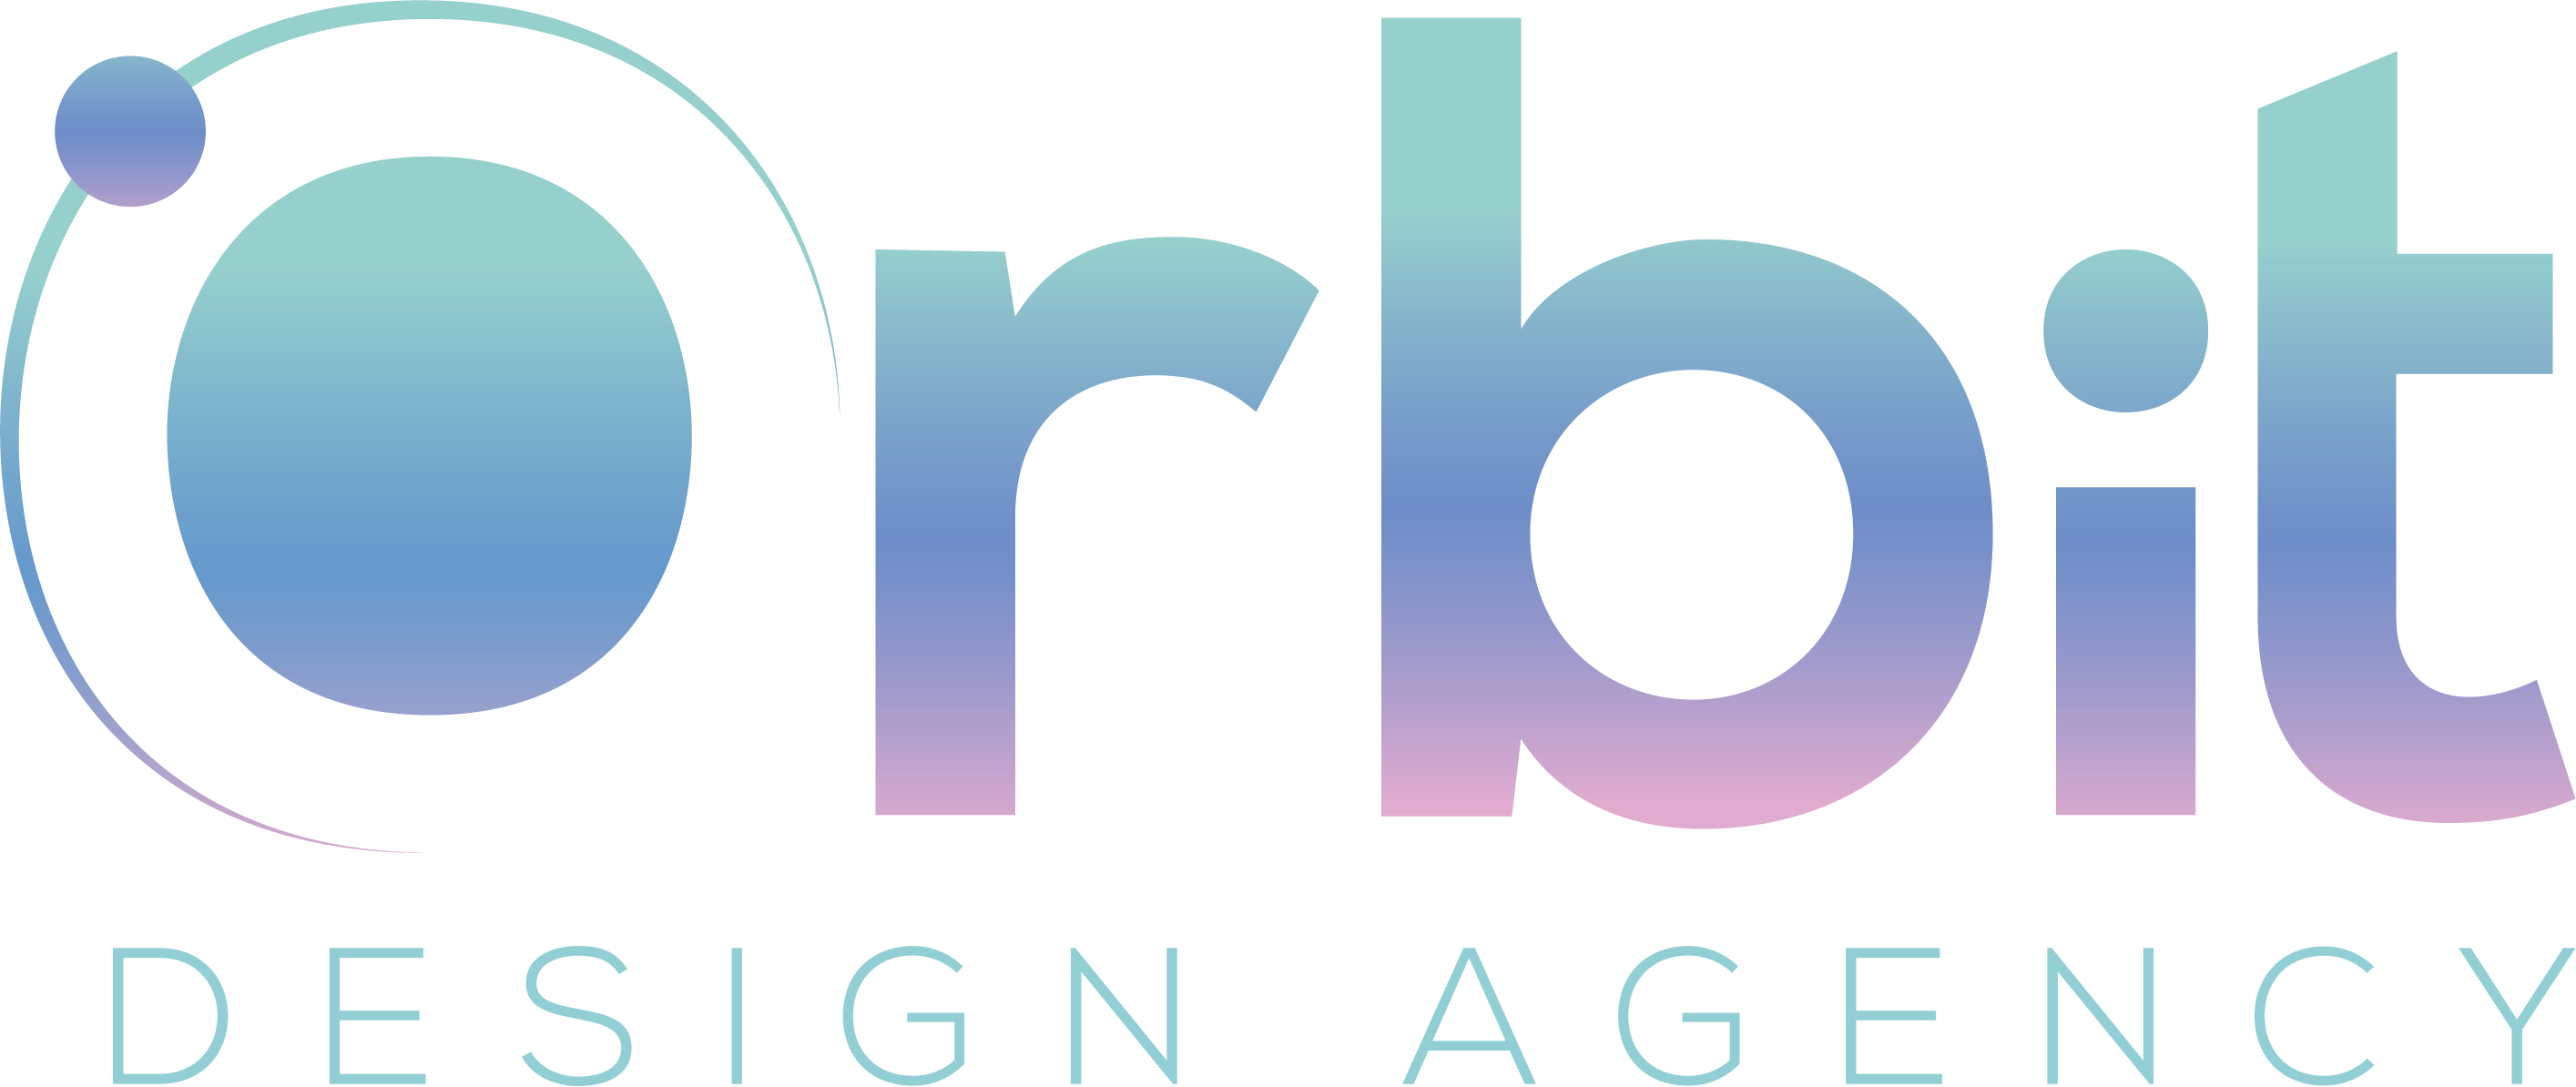 Orbit design Agency